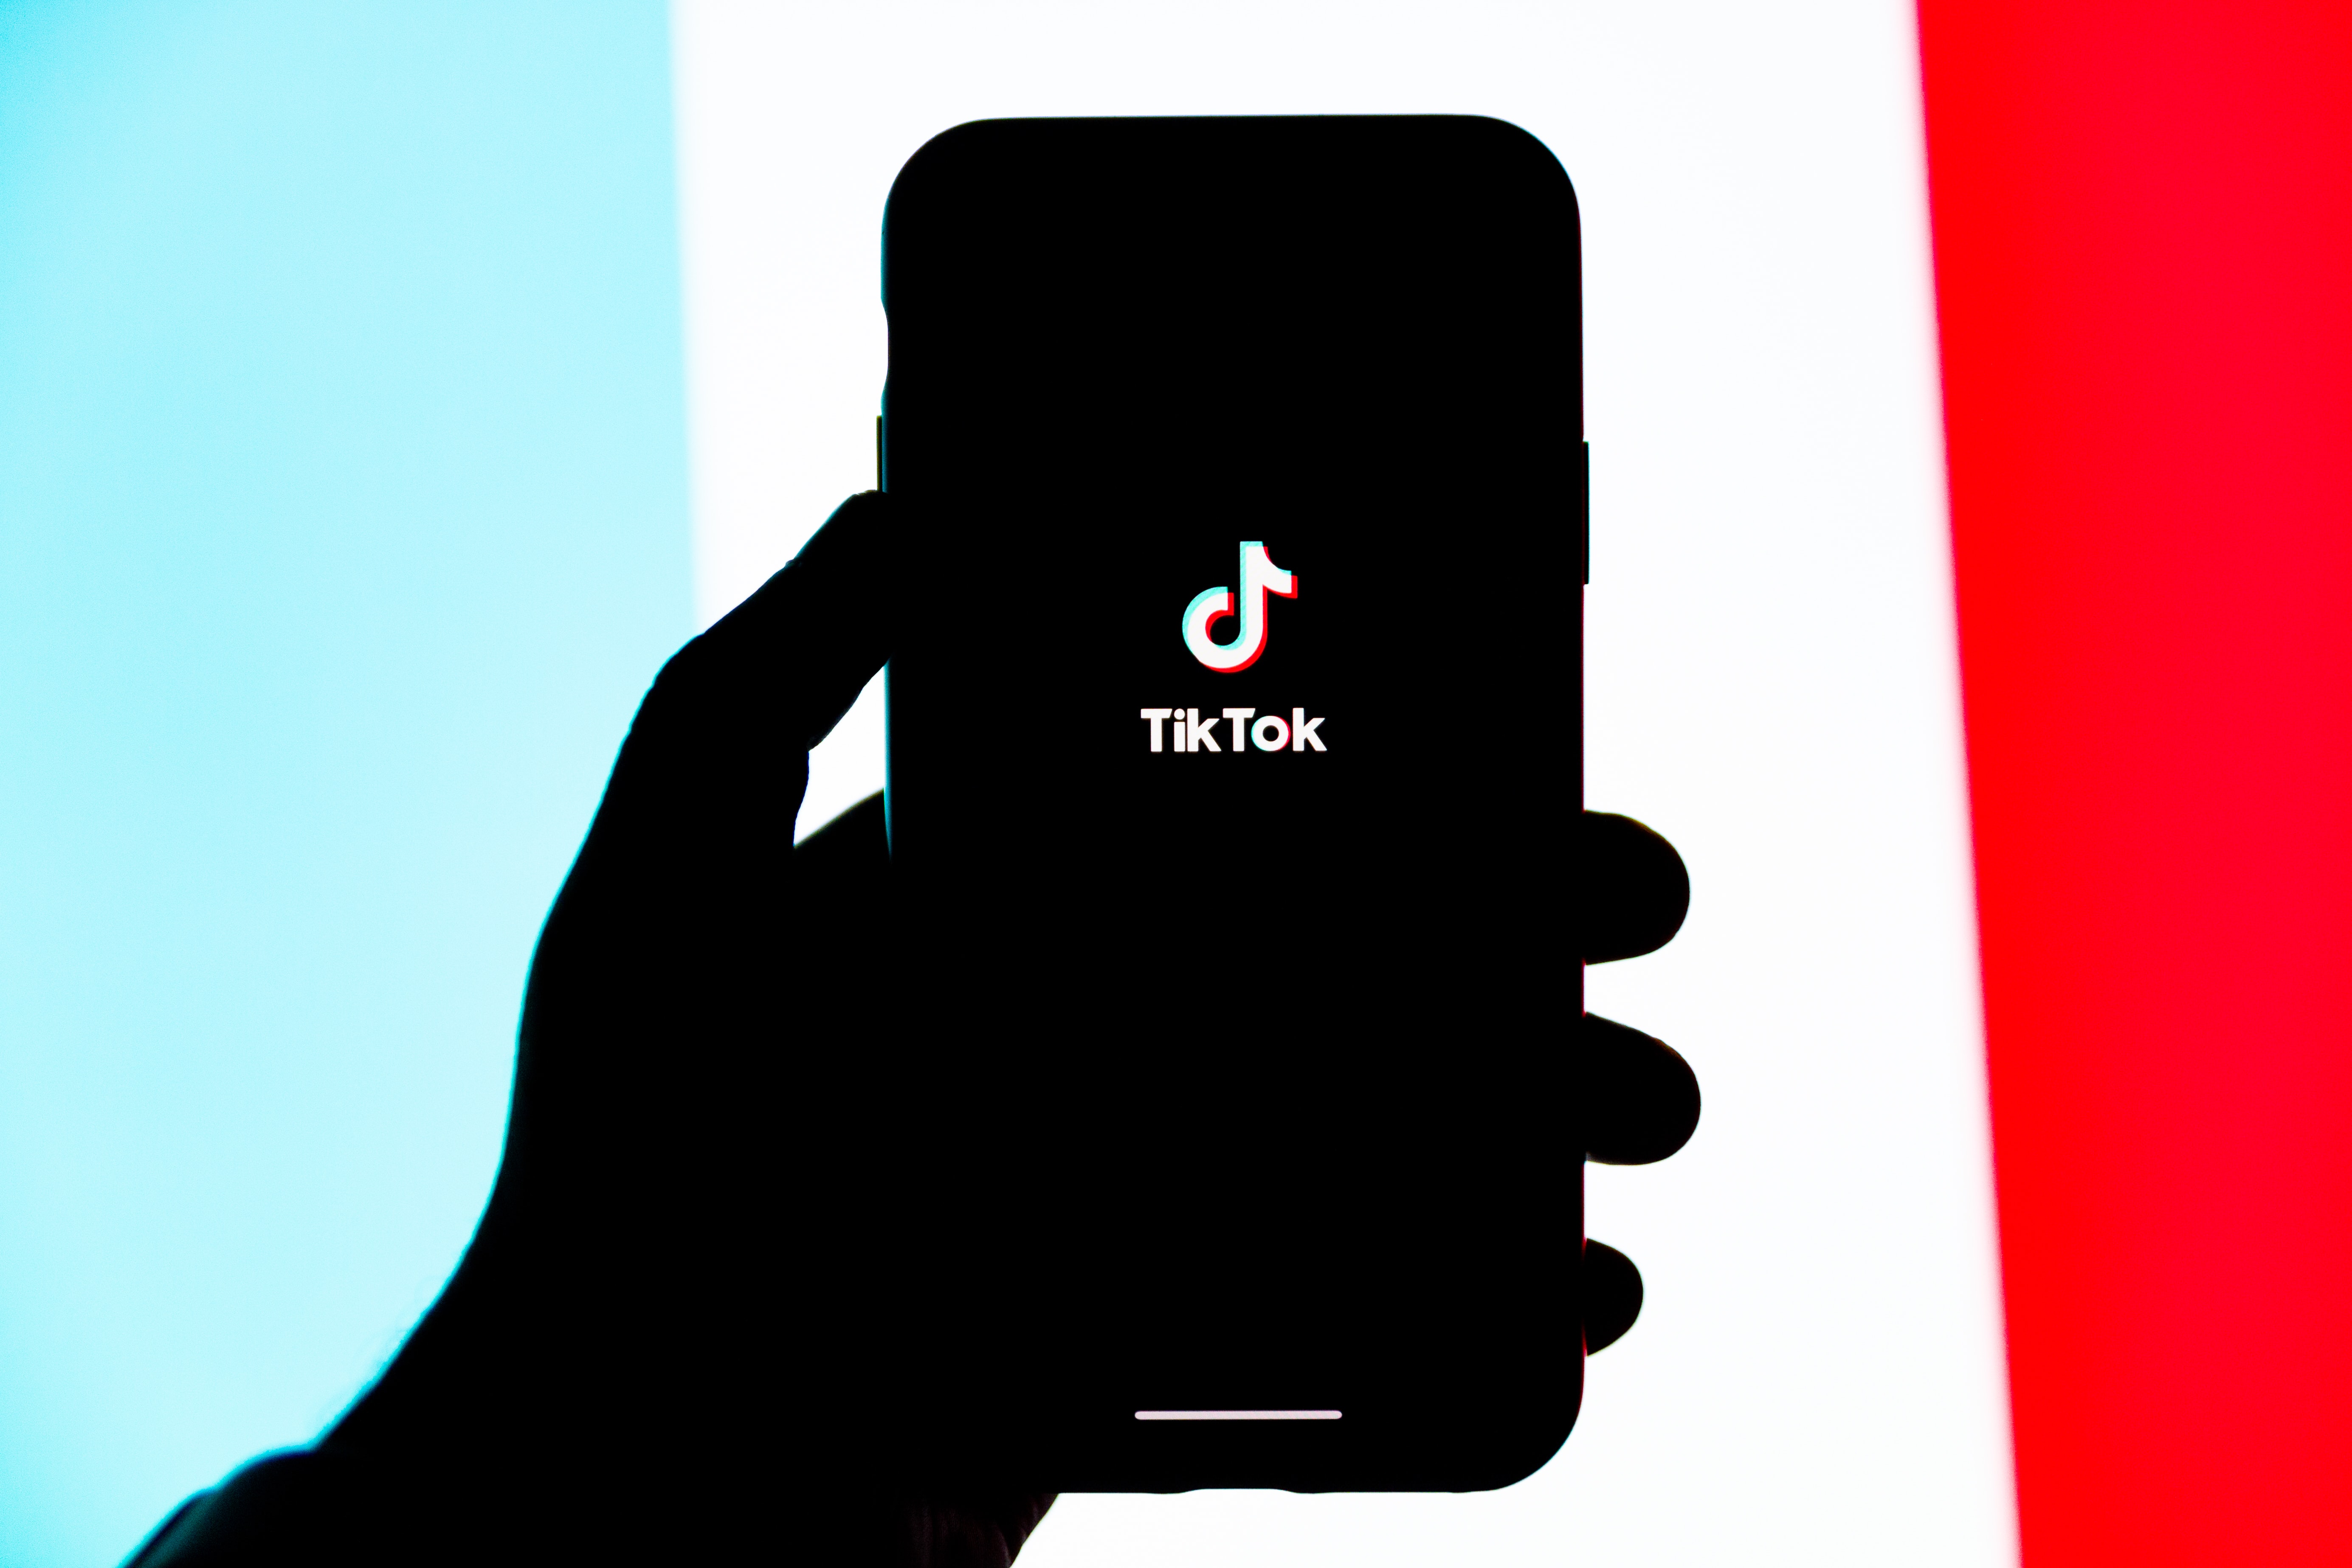 TikTok presents ‘Resumes’ for Job Opportunities